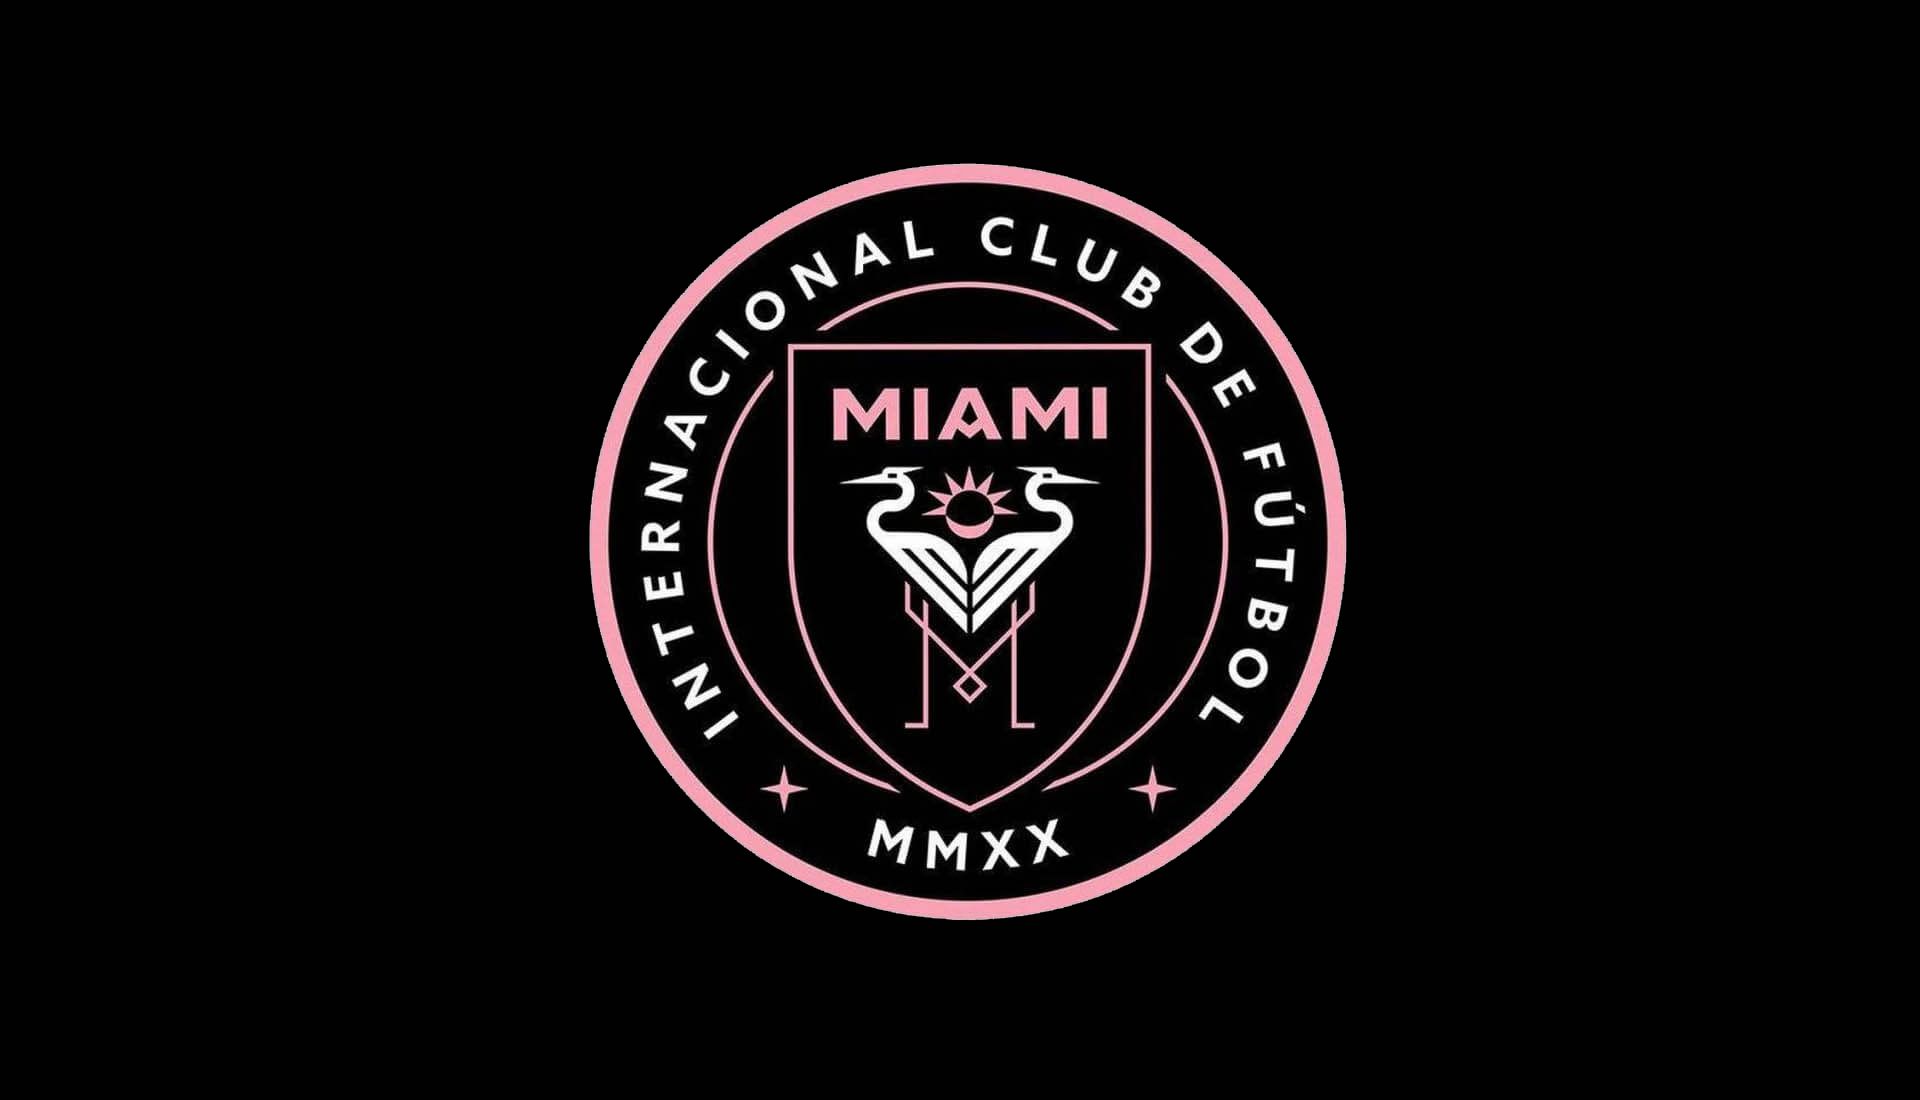 Welcoming the Club Internacional De Futbol Miami